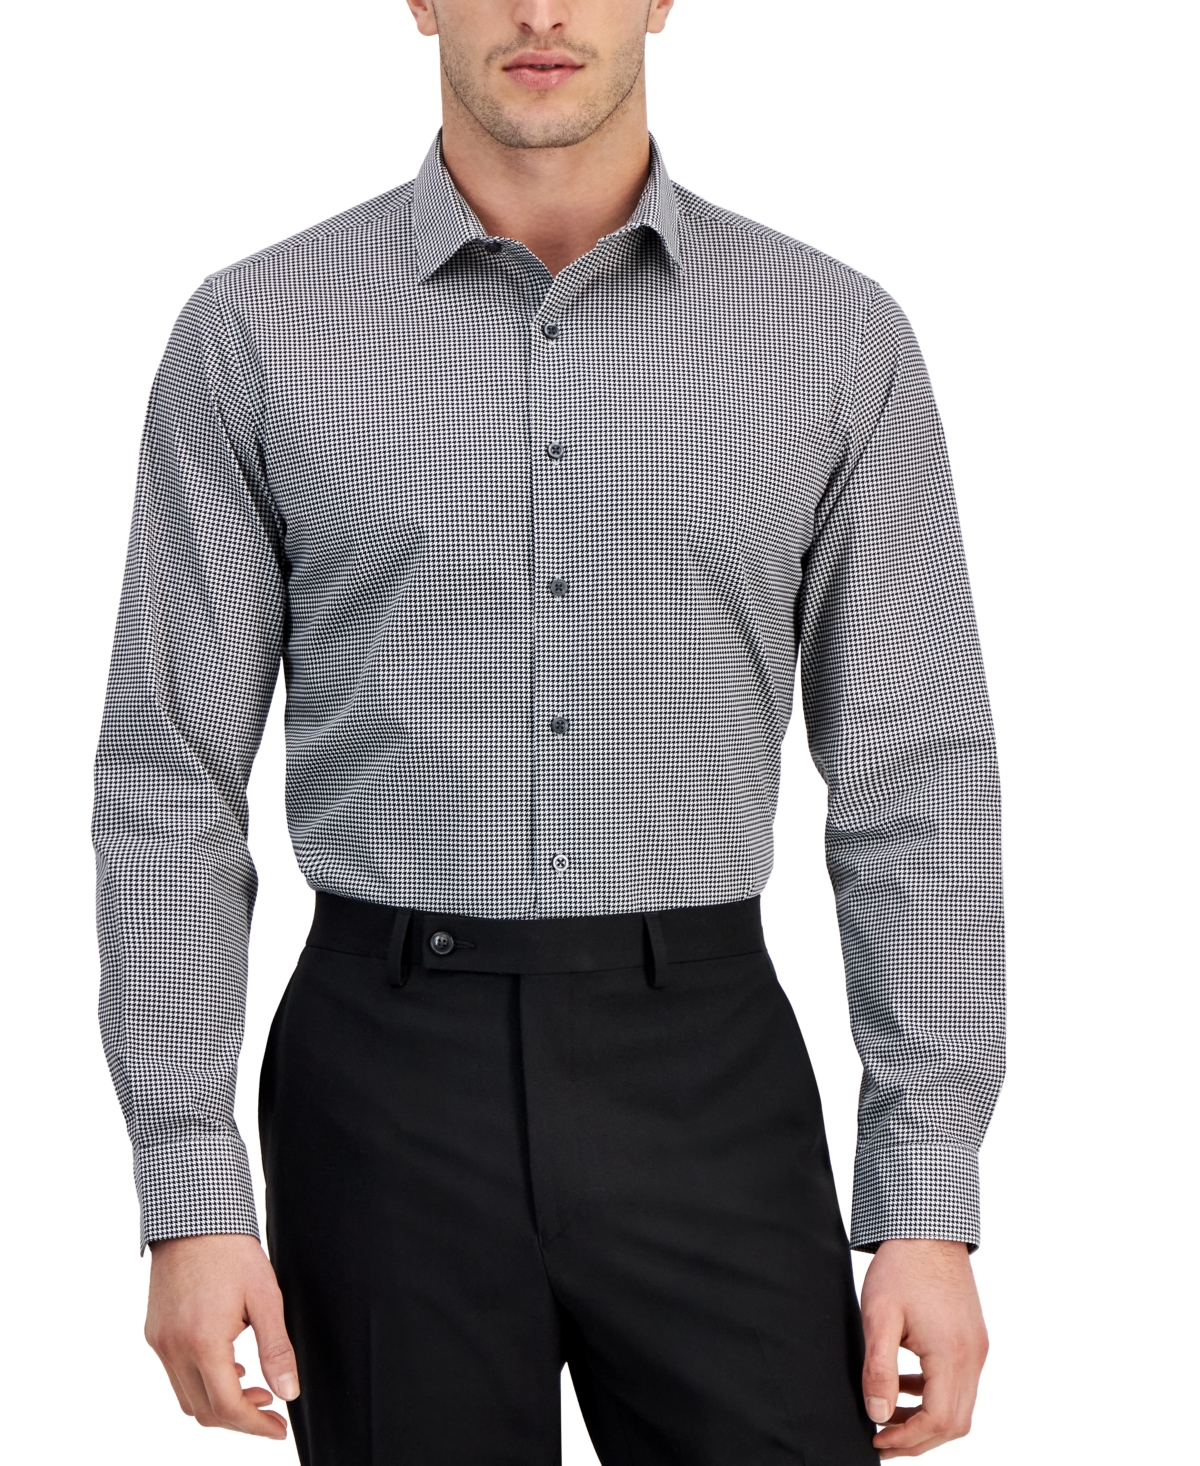 Alfani Men's Slim Fit Houndstooth Dress Shirt (Black White, Size S-2XL) $16.50 + Free Shipping on $25+